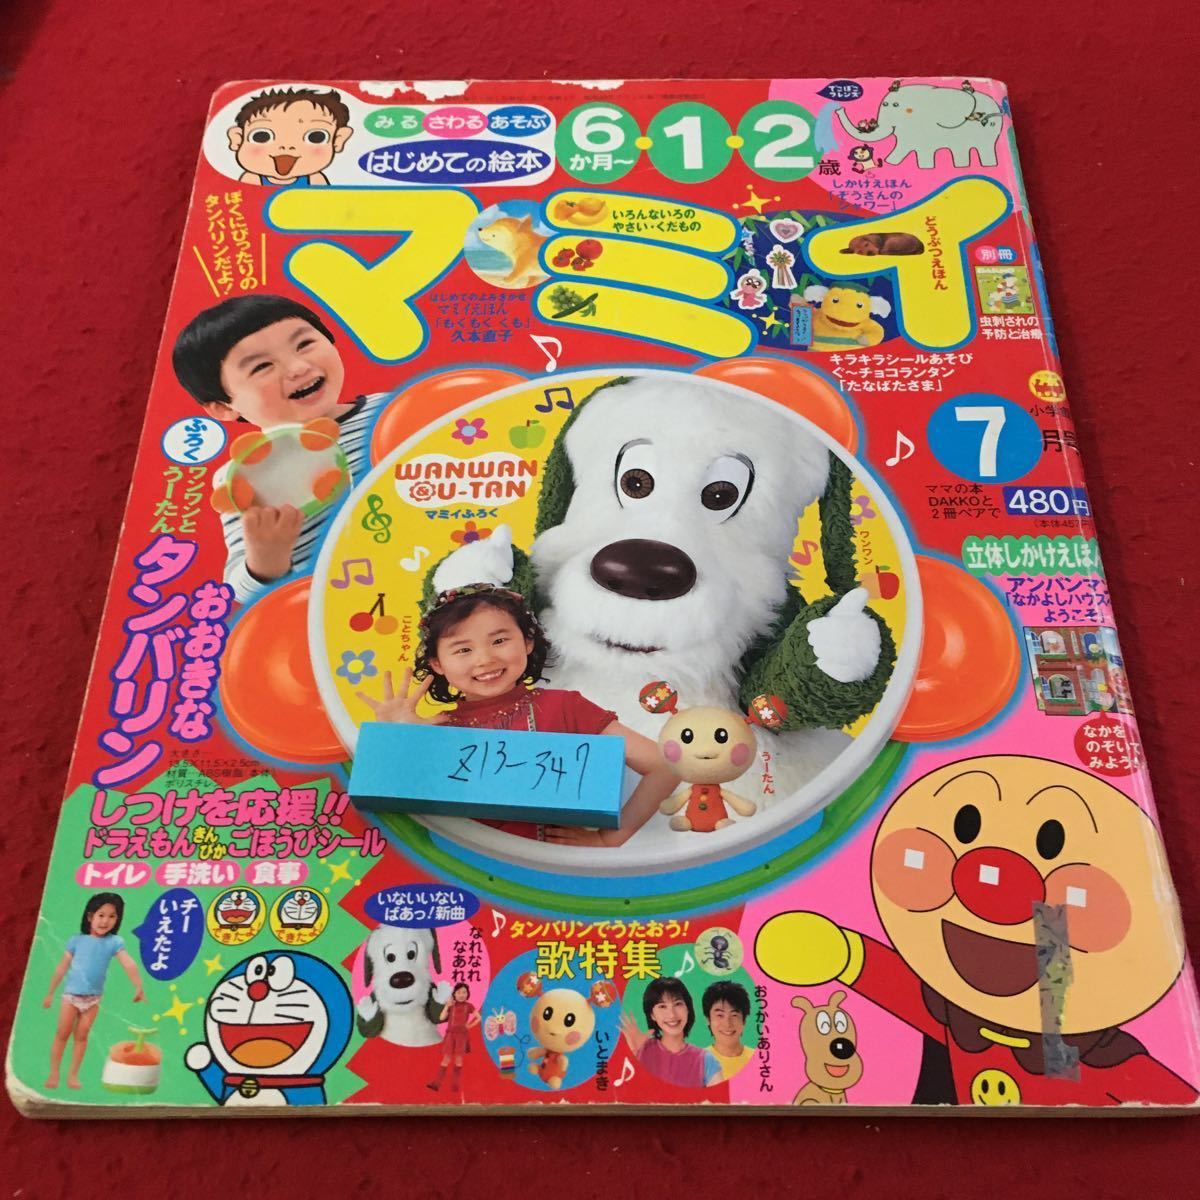 Z13-347 Mamii 6 месяцев, 1, 2 года Shogakukan Heisei 19 Опубликован июльский выпуск I'm Not Alone! С мистером/госпожой, Анпанманом, Дораэмоном и т.д.